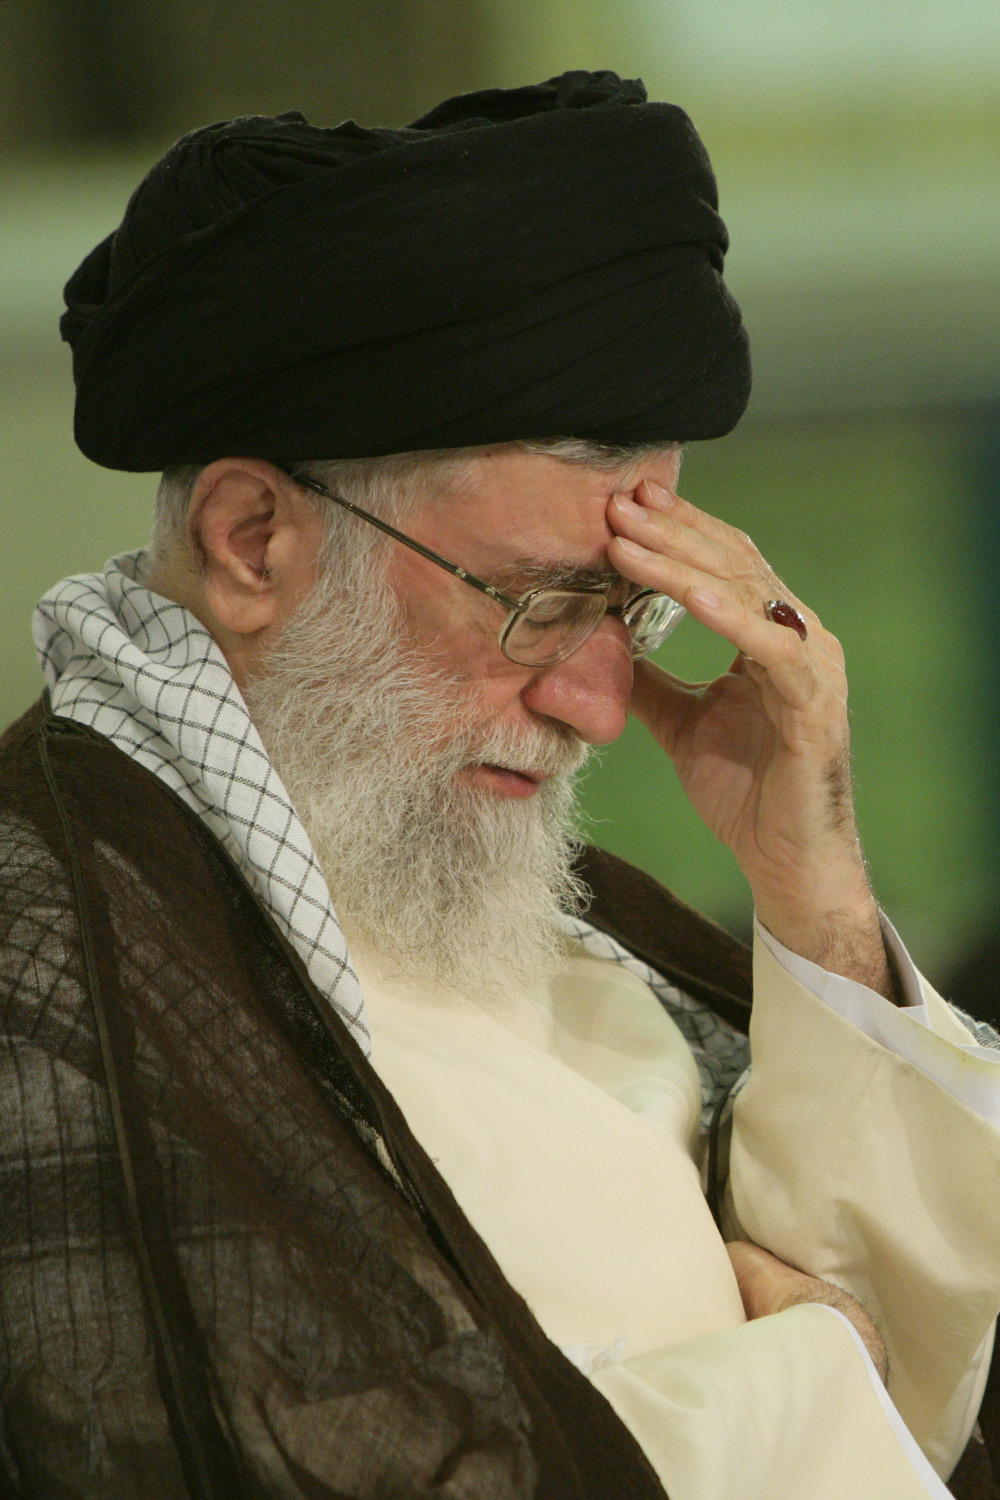 http://farsi.khamenei.ir/ndata/news/8026/B/khamenei-880619-002.jpg